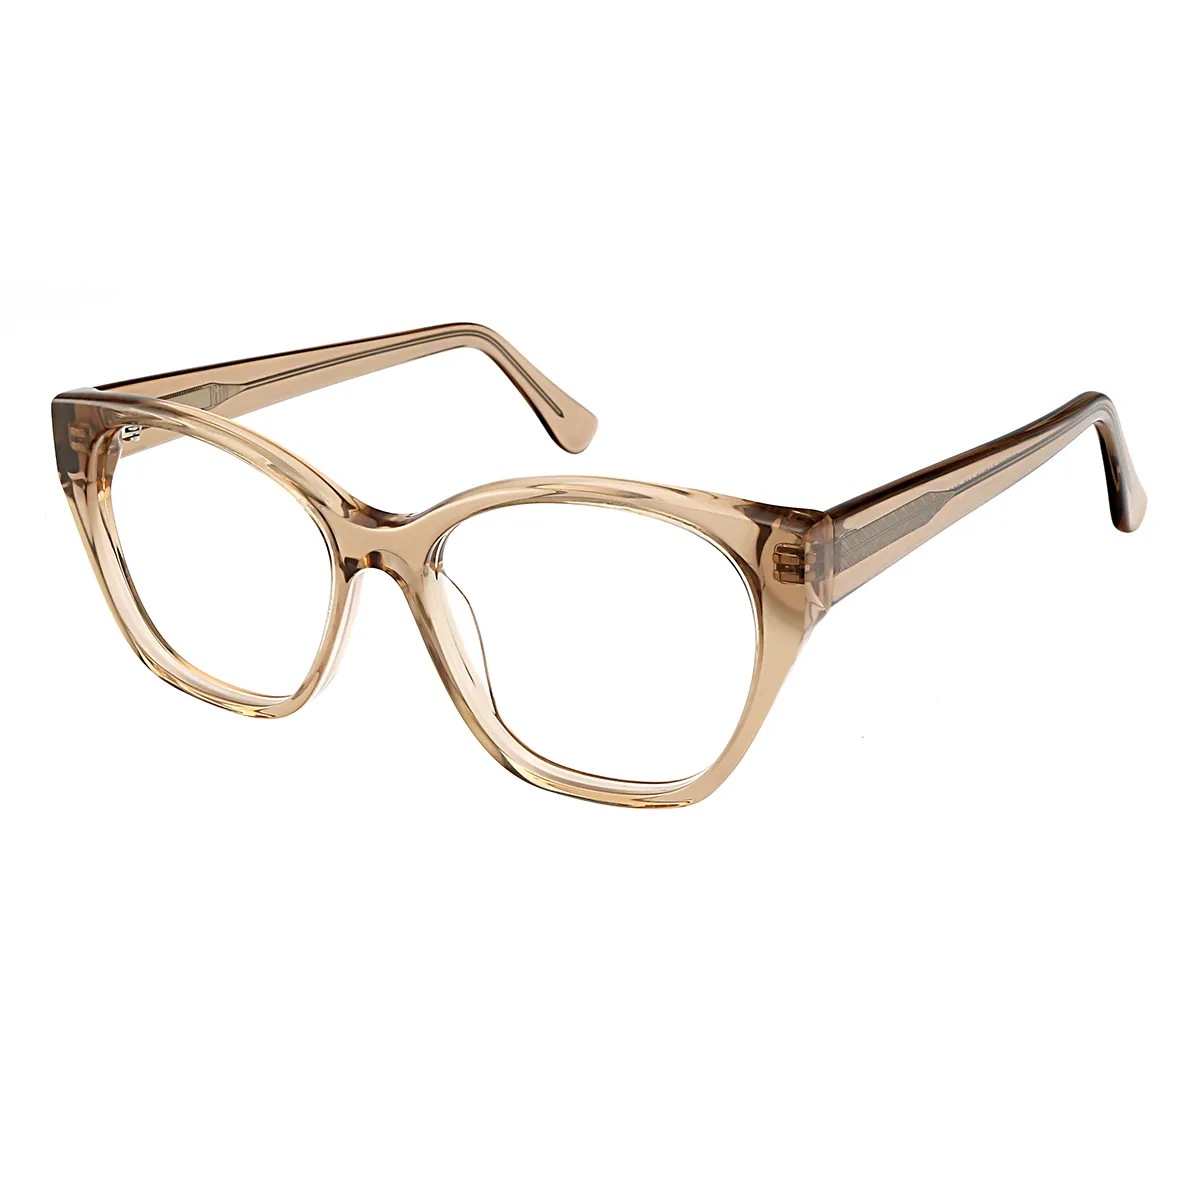 Surrey - Square Transparent Brown Glasses for Women